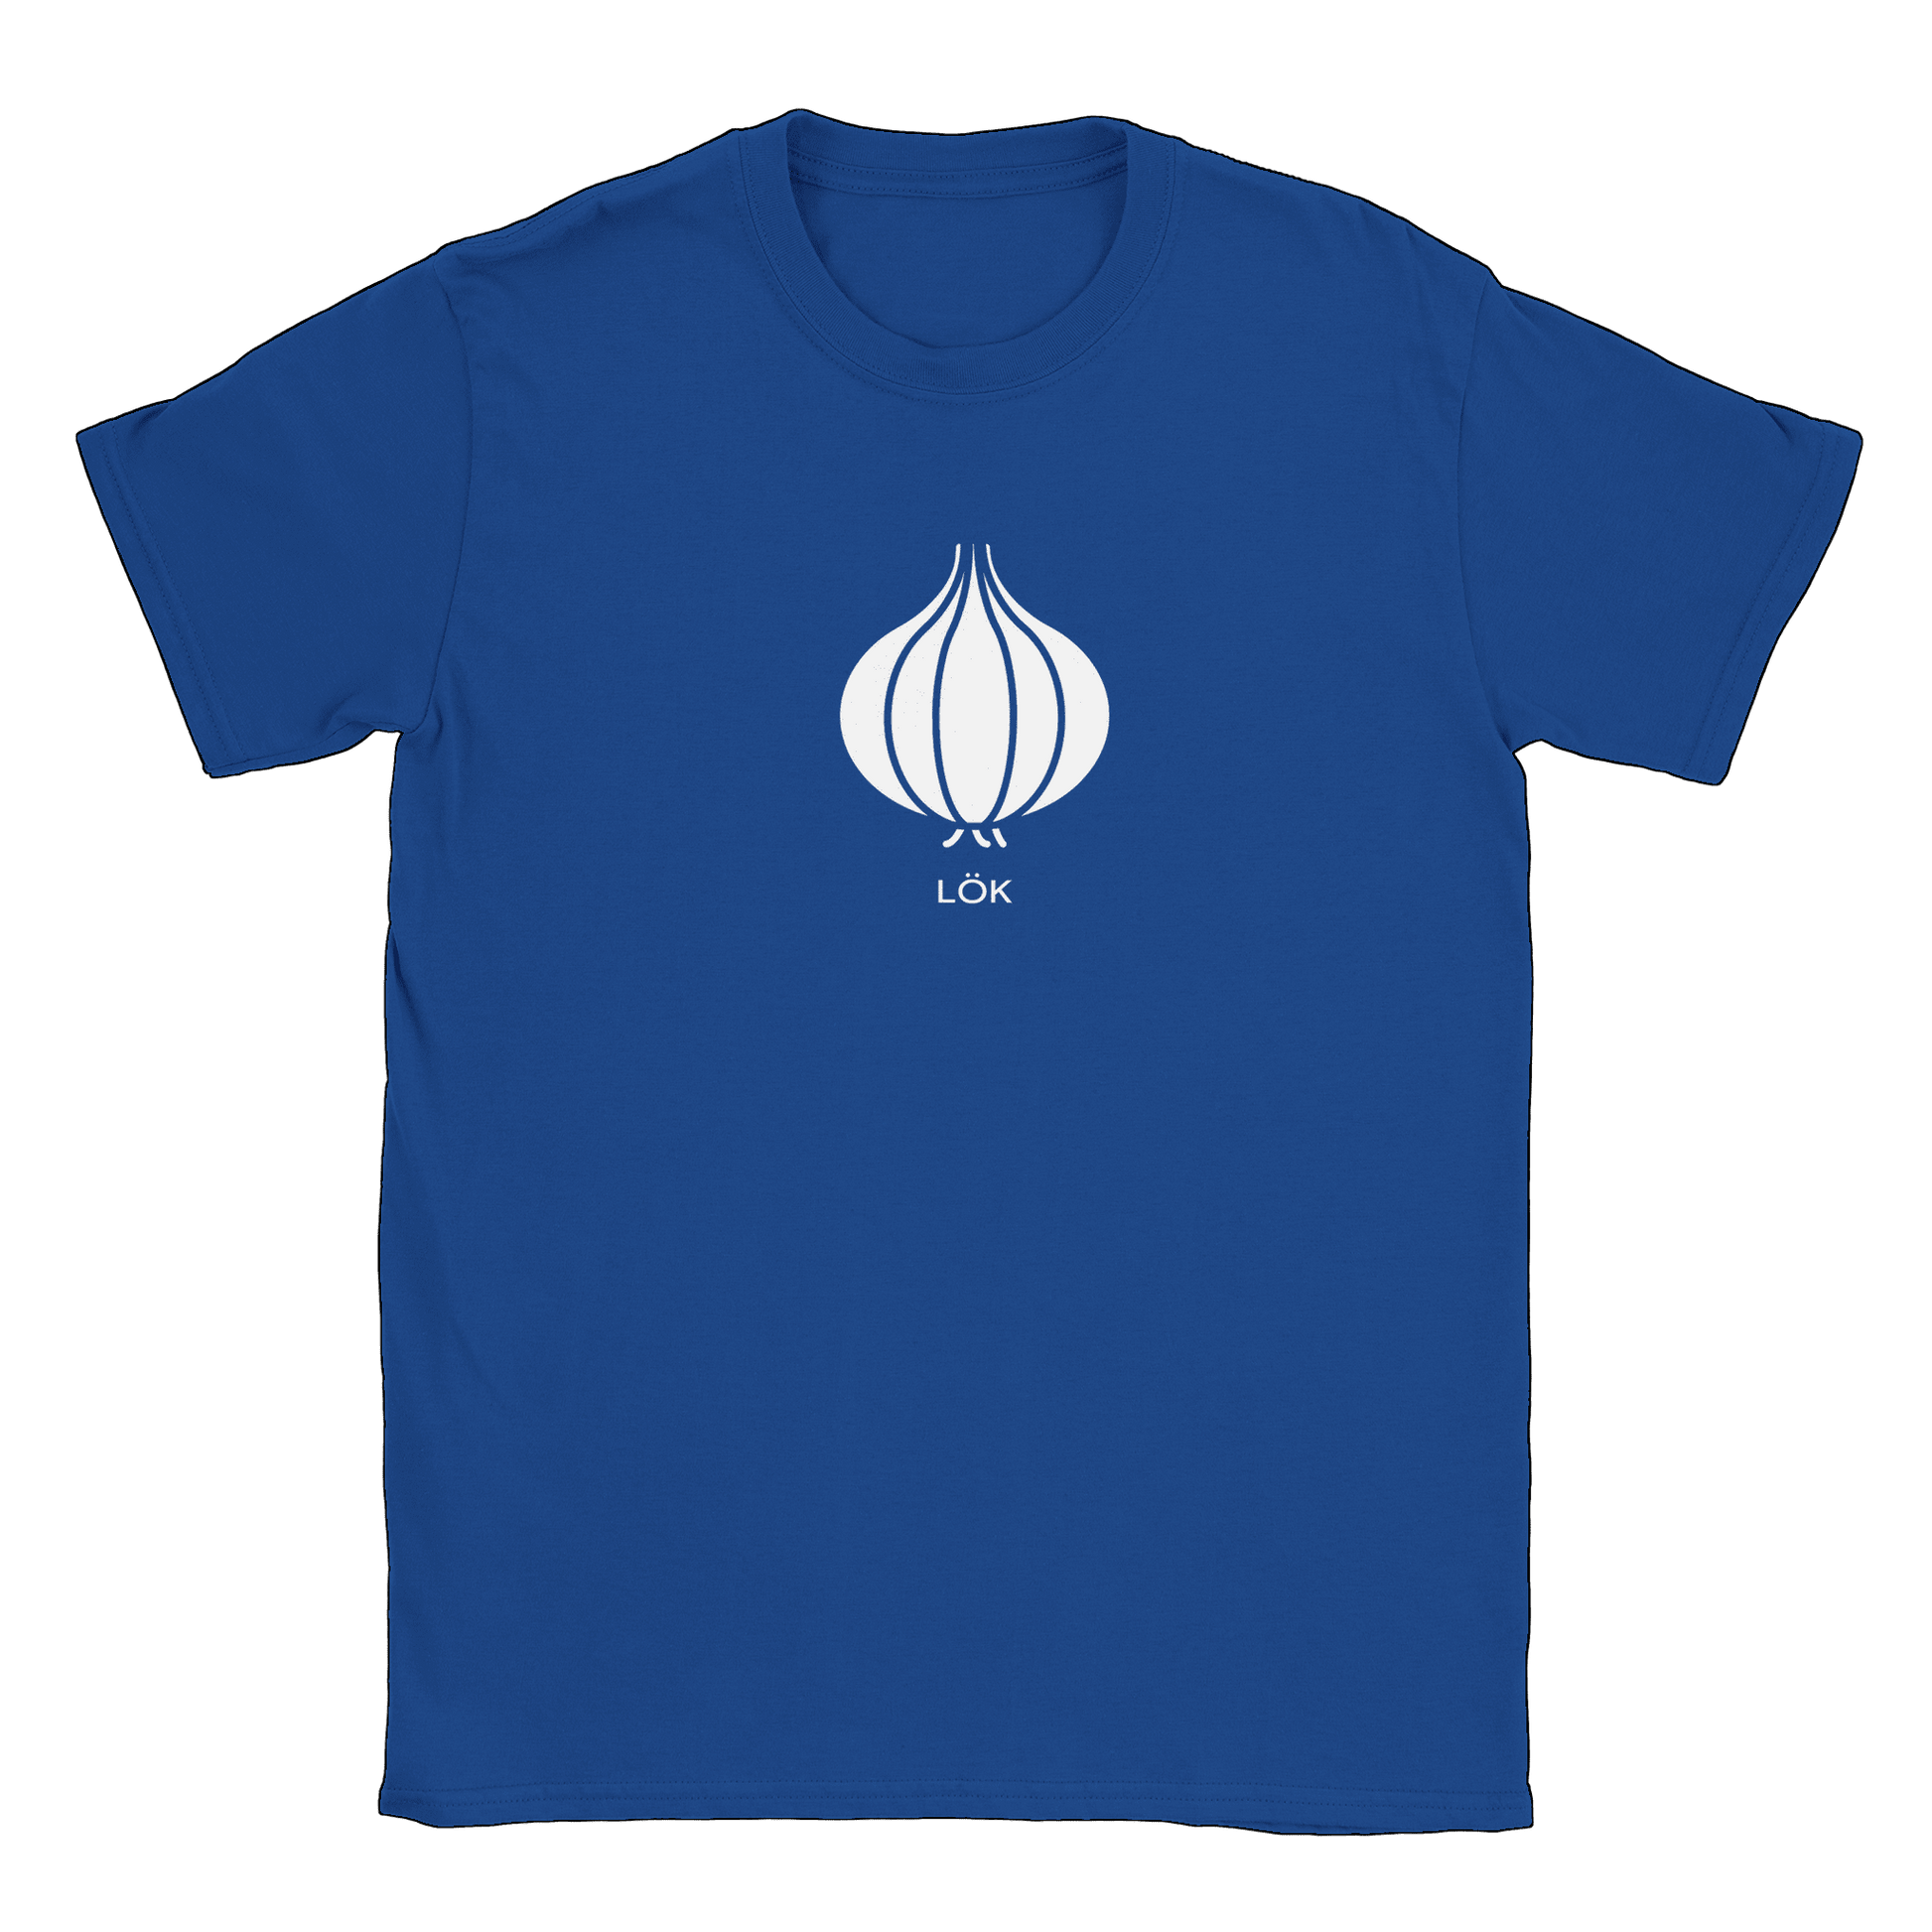 Lök - T-shirt Royal